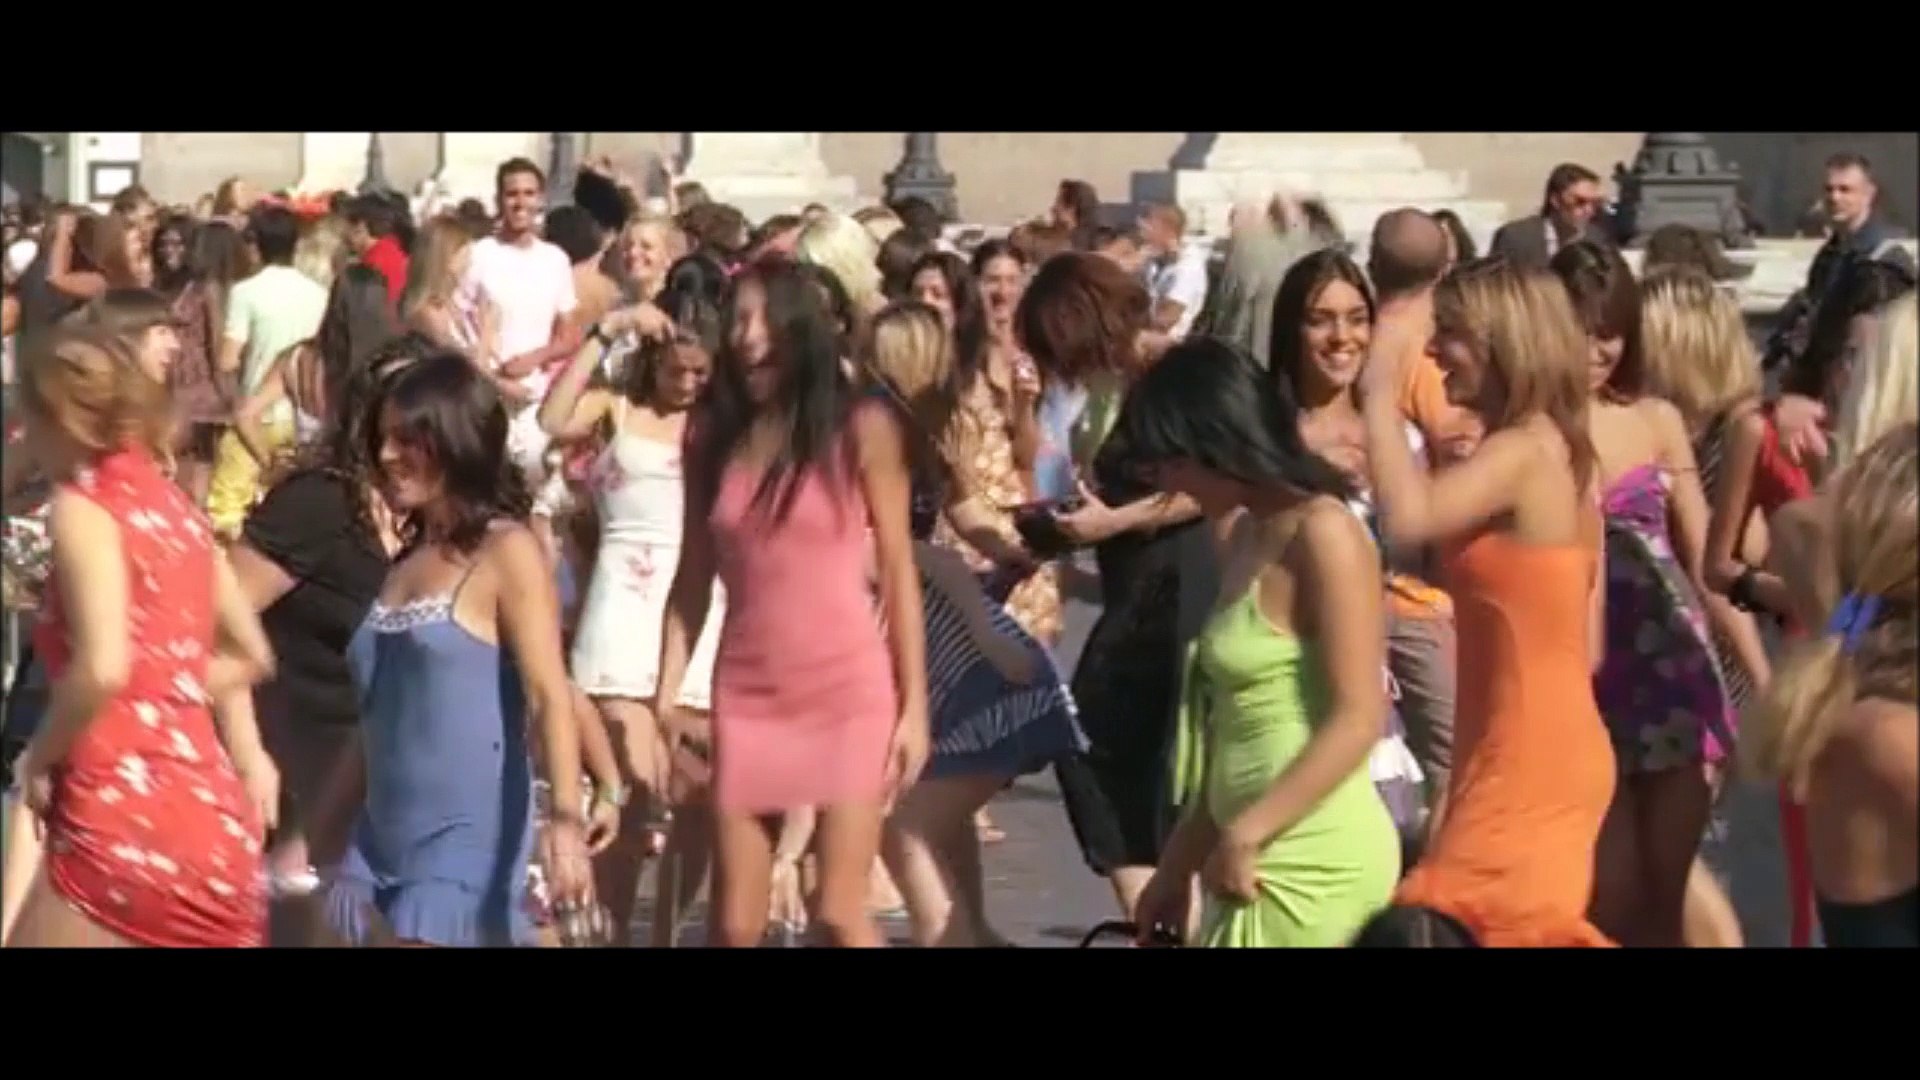 Notte prima degli esami - Oggi [HD] - flash mob a Castel Sant'Angelo (RM) -  Video Dailymotion